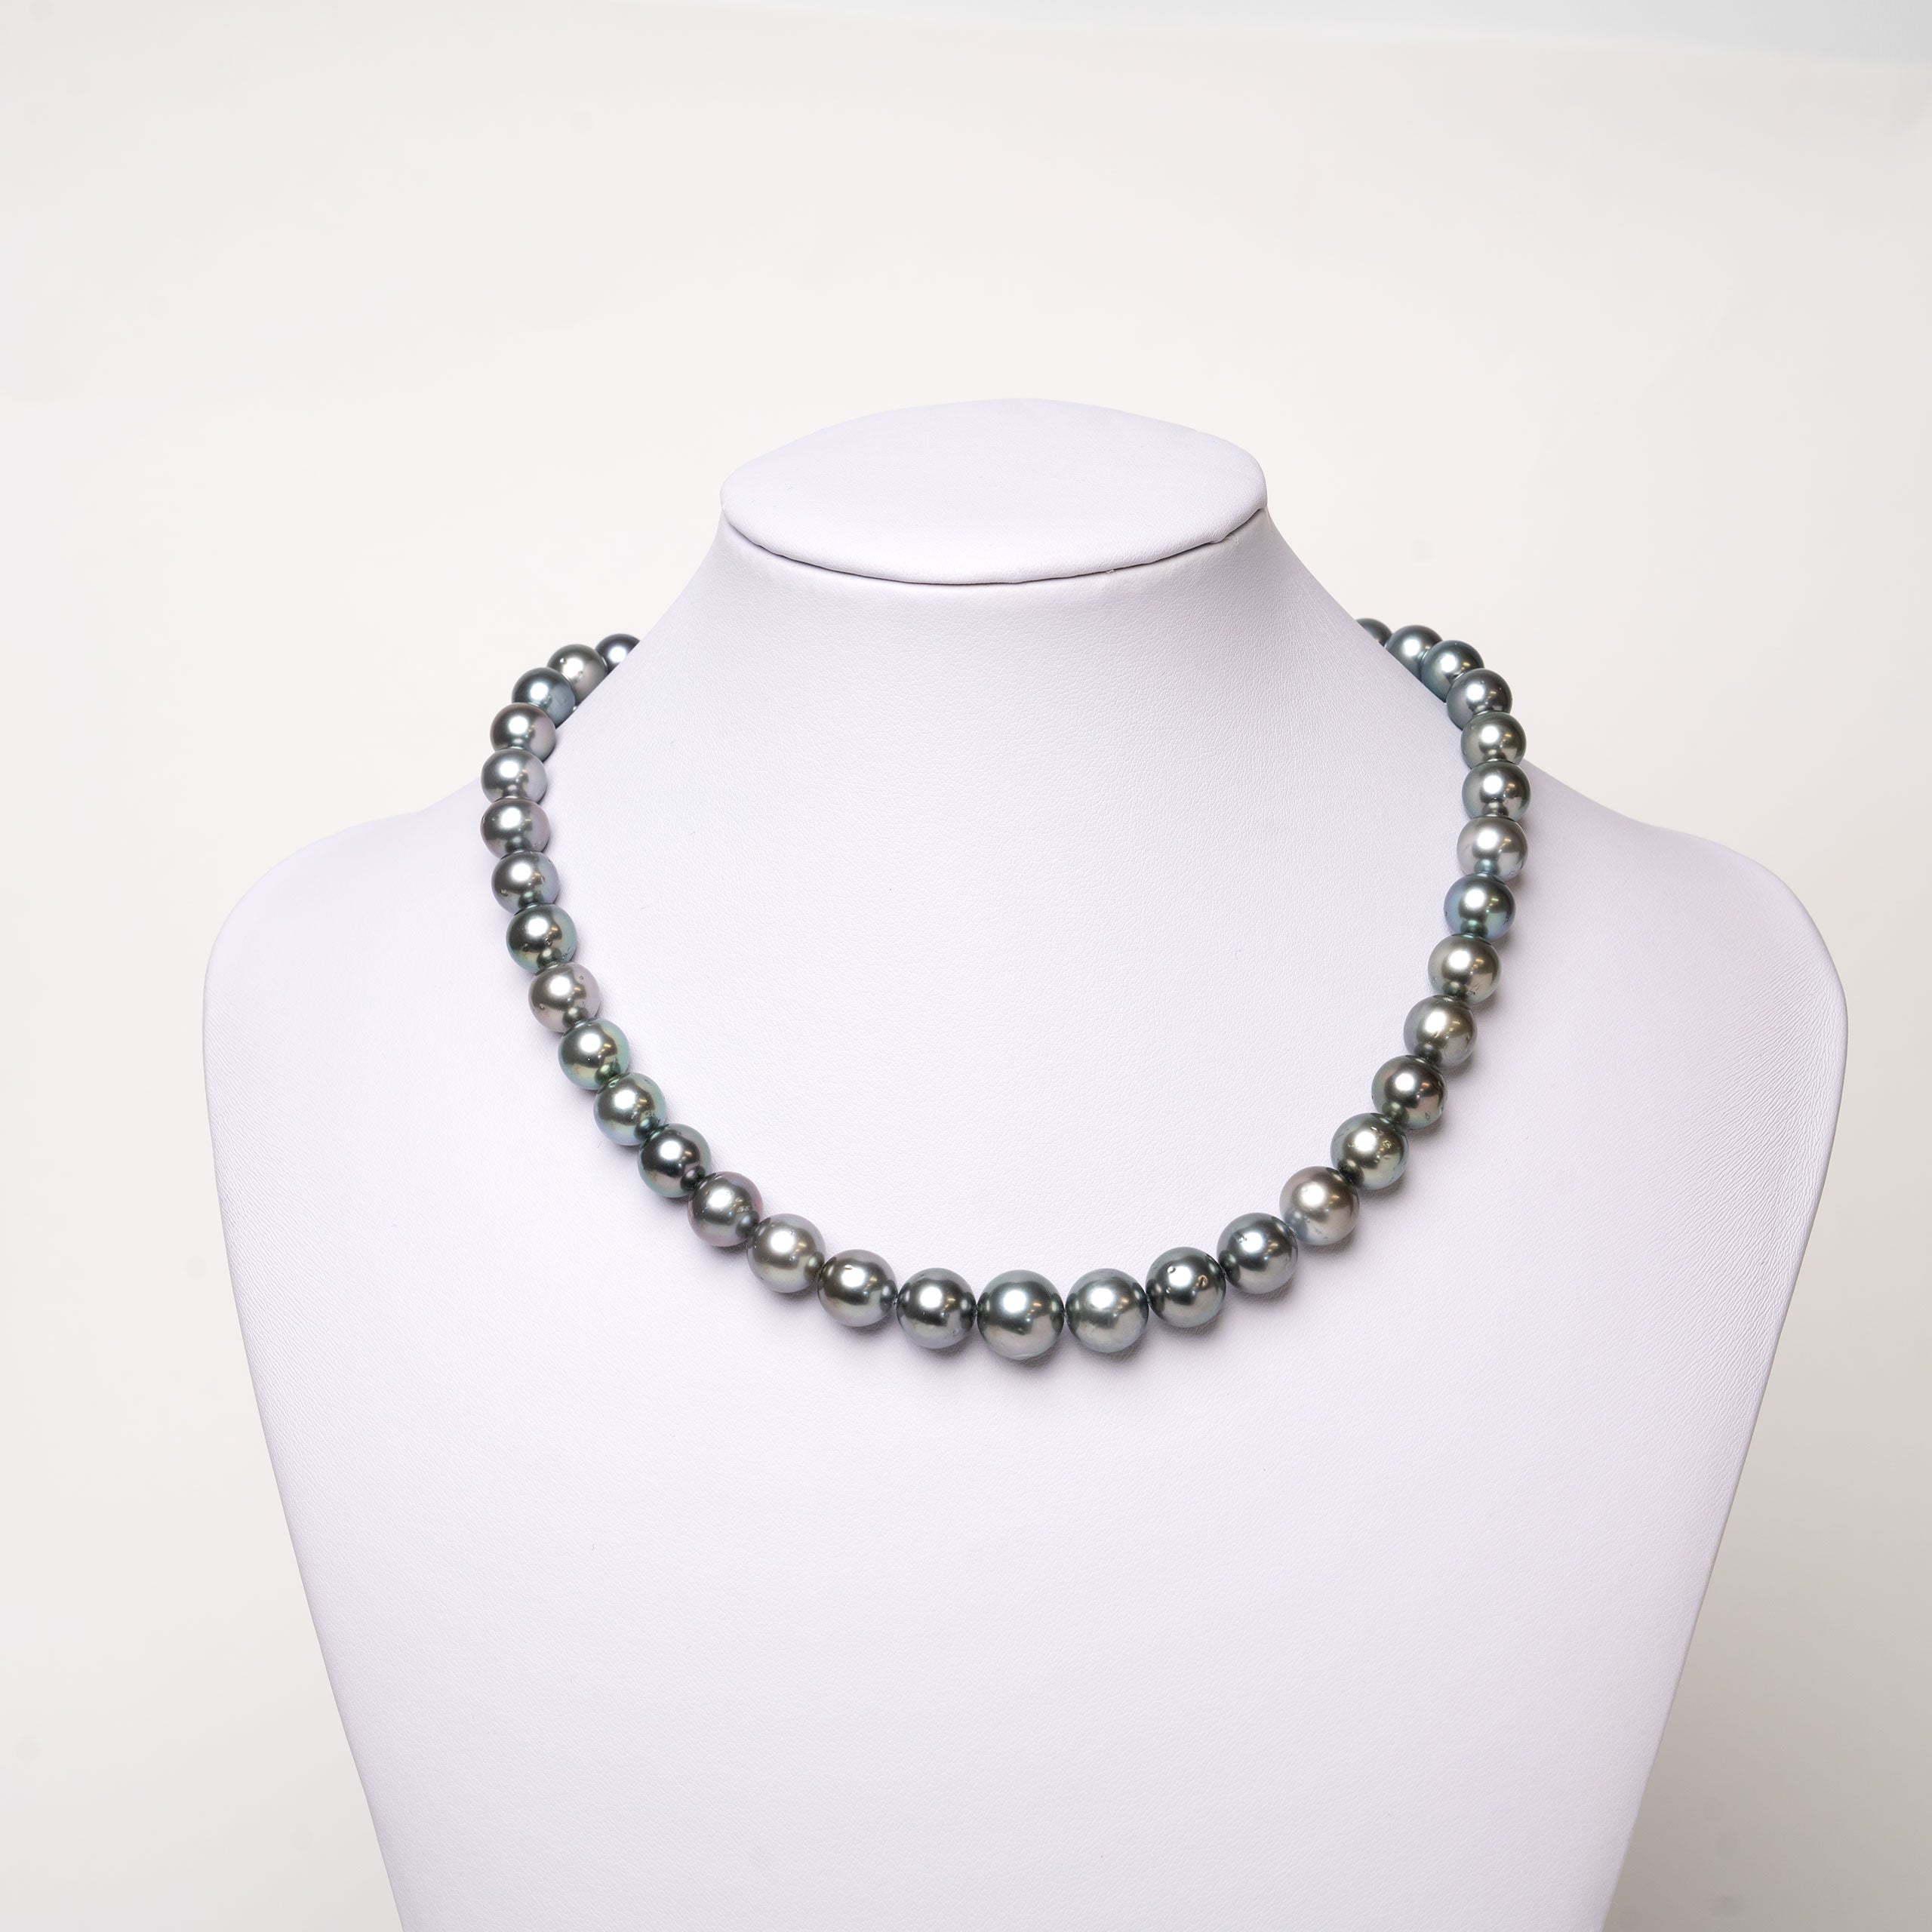 Collar de perlas cultivadas naturales Tahití redondas de 8 a 11 mm de color gris plateado.